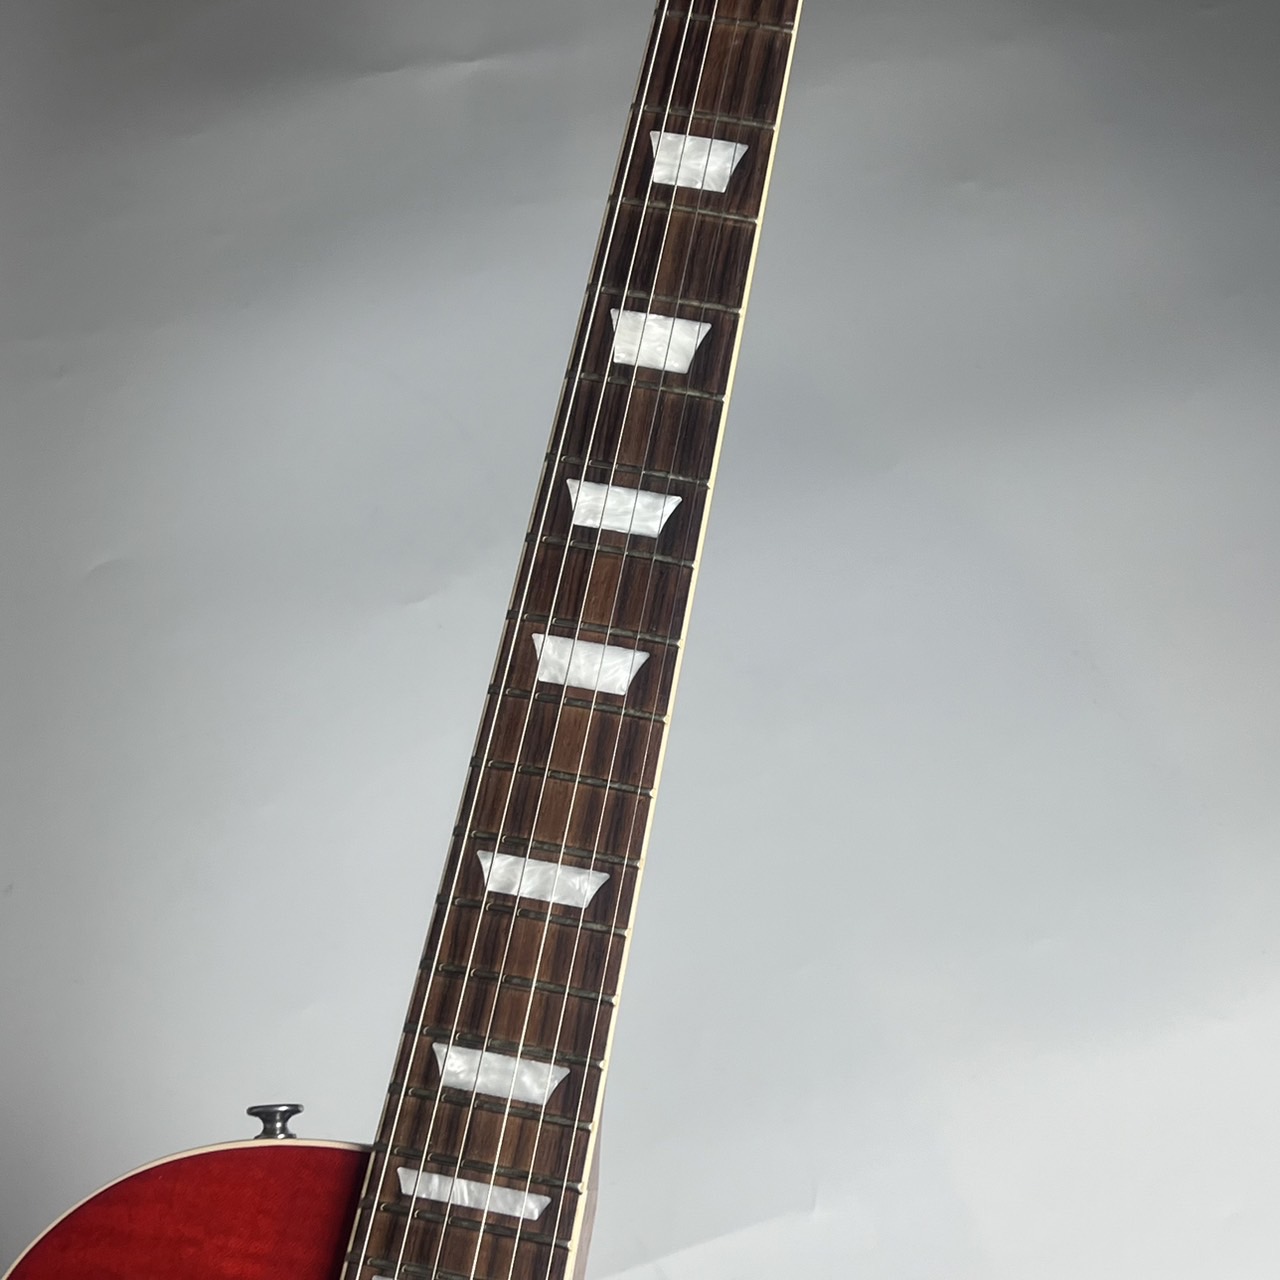 Gibson Les Paul Standard 60s Faded【現物画像】Vintage Cherry Sunburst  Weight:4.02Kg ギブソン 【 京王聖蹟桜ヶ丘店 】 | 島村楽器オンラインストア